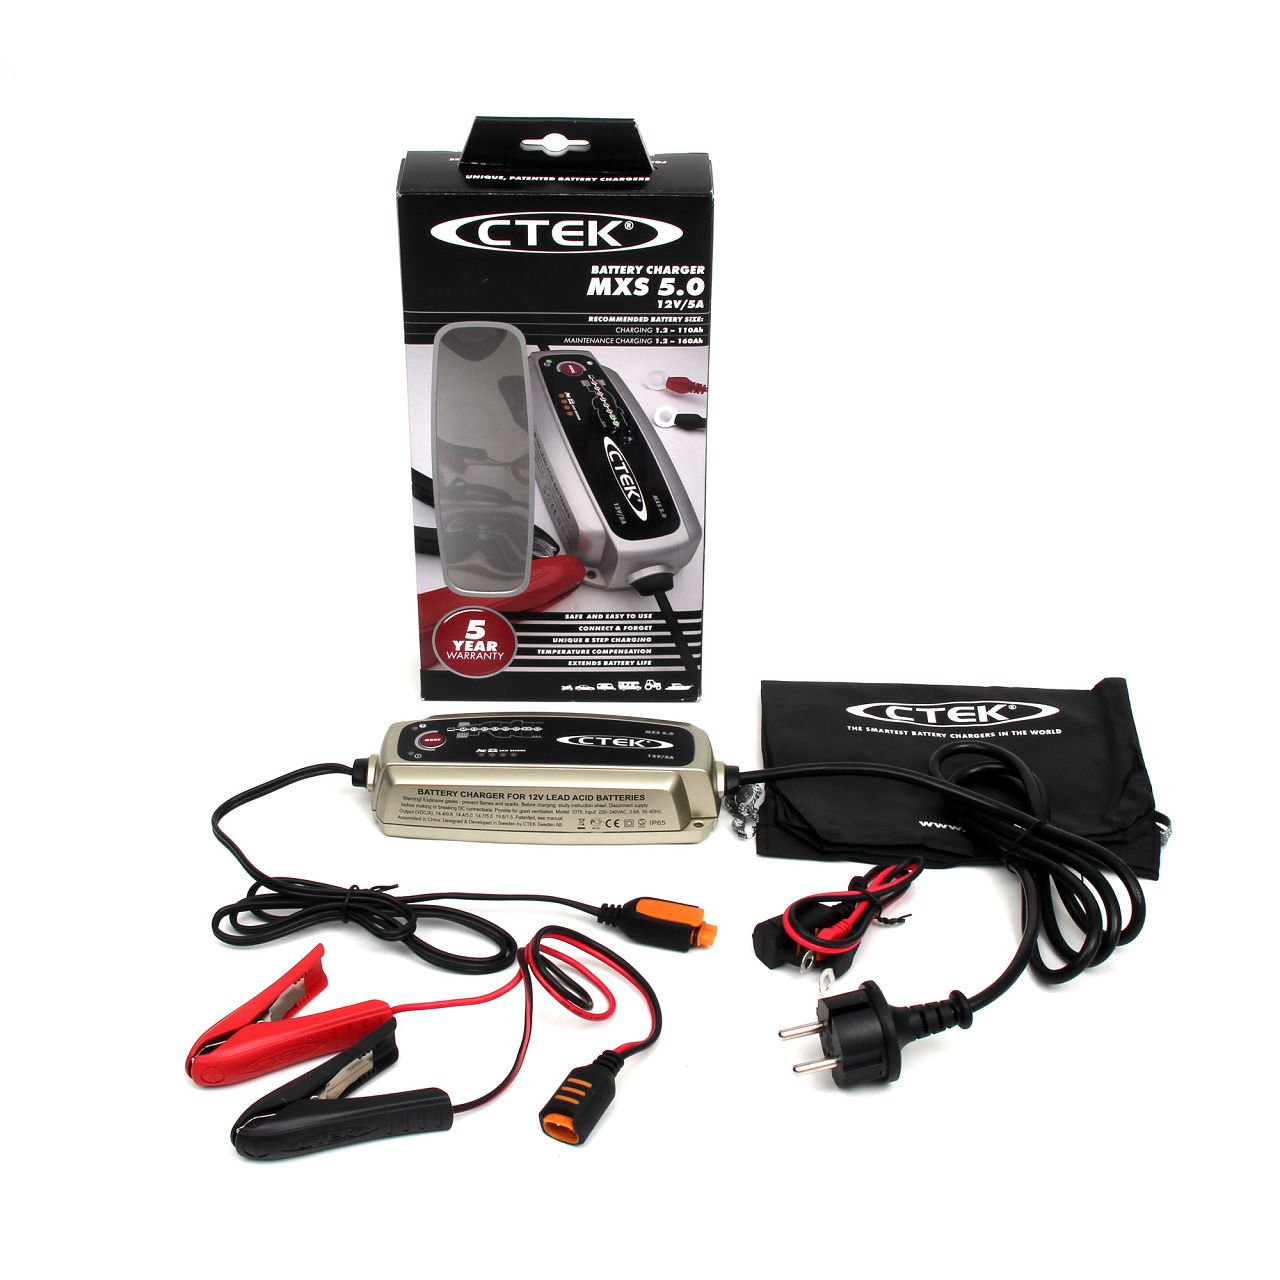 CTEK MXS 5.0 Batterieladegerät mit automatischer Temperaturkompensation